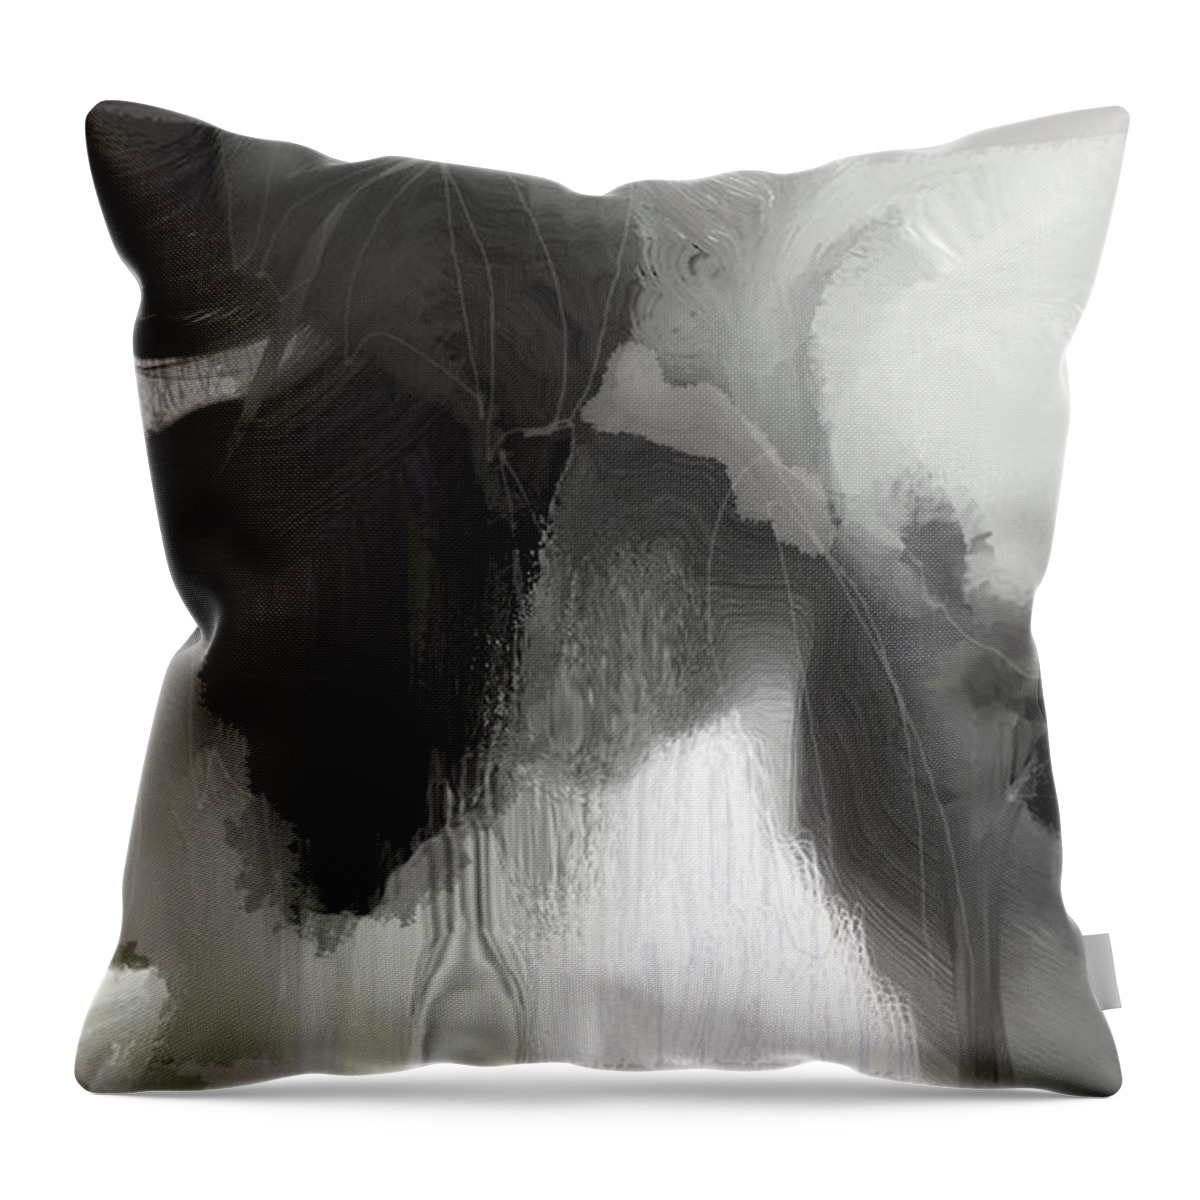  Throw Pillow featuring the digital art Black Synonyms 2 by Davina Nicholas